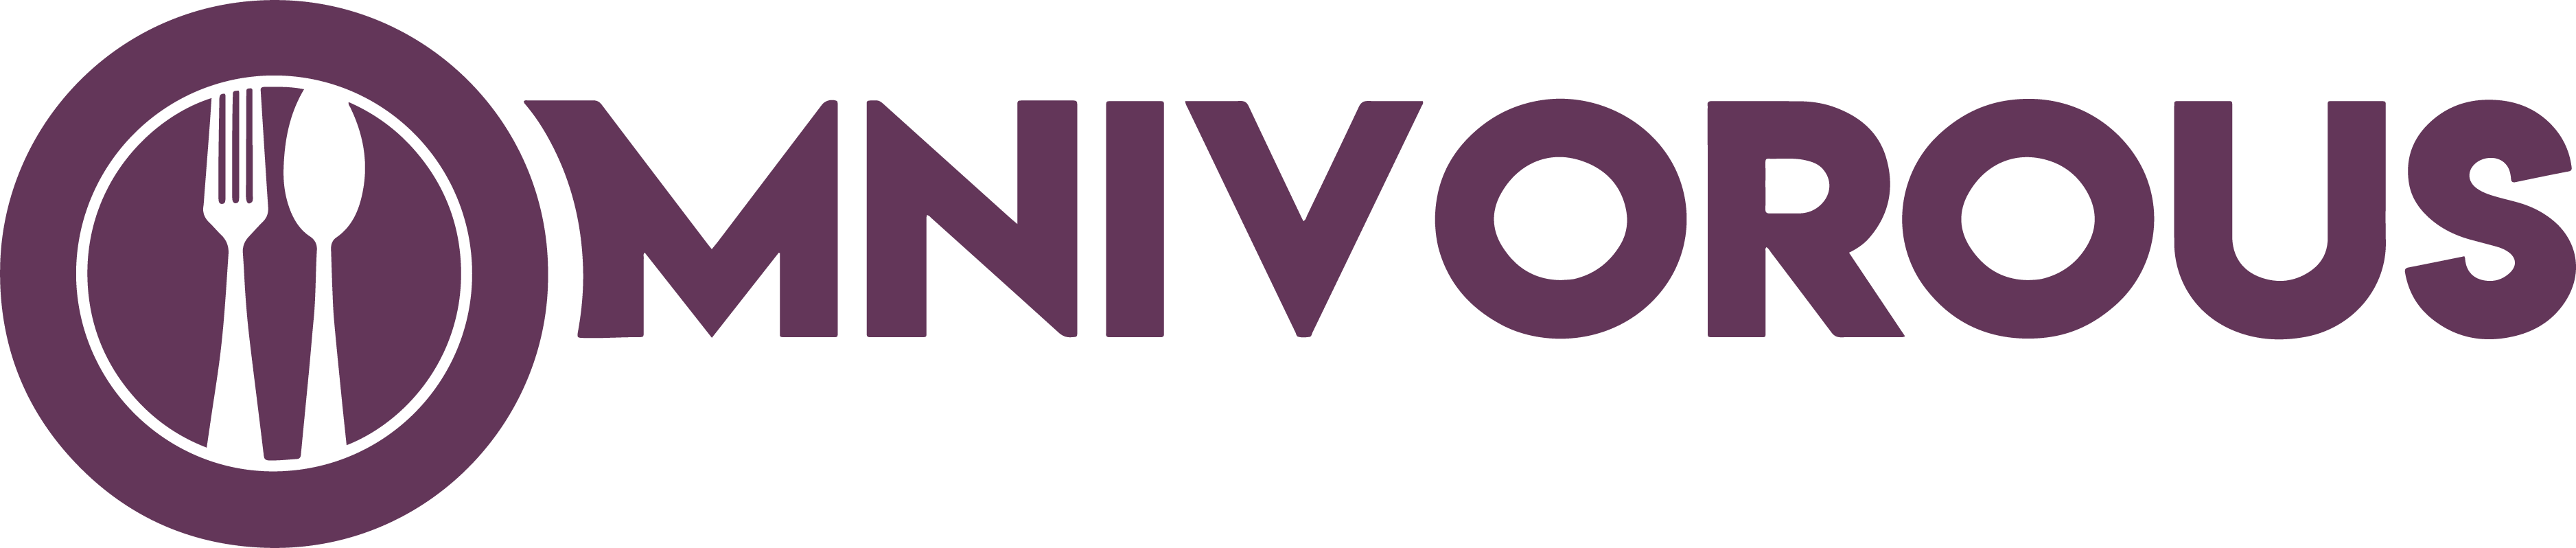 Omnivorous event logo